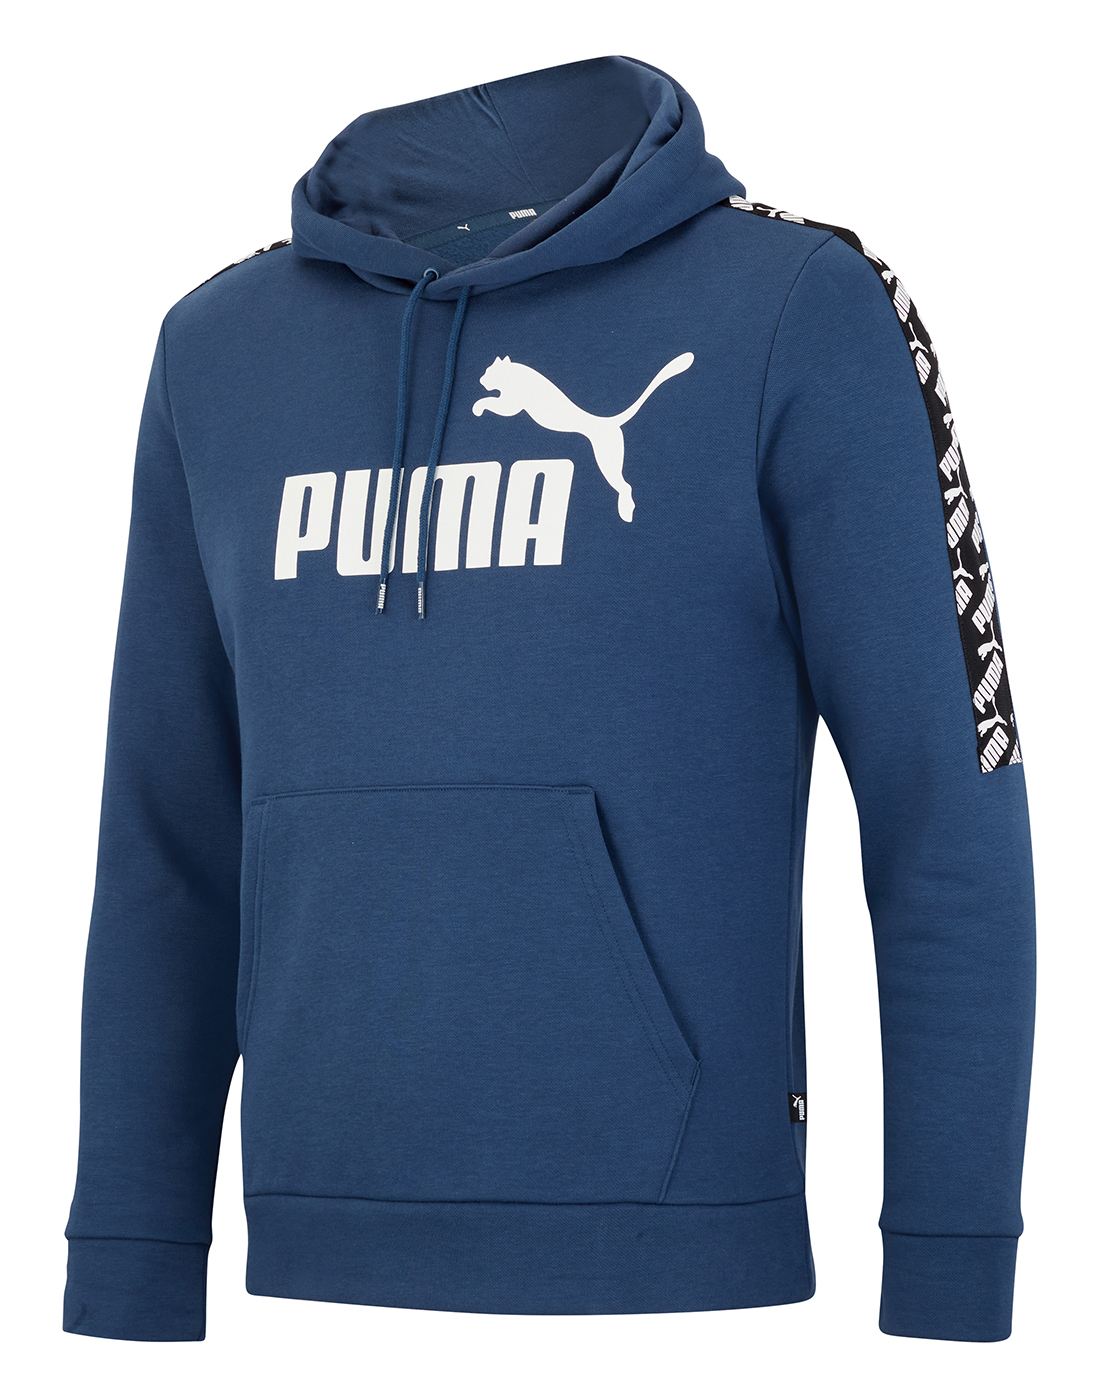 Puma Mens Amplified Hoodie - Navy | Life Style Sports EU